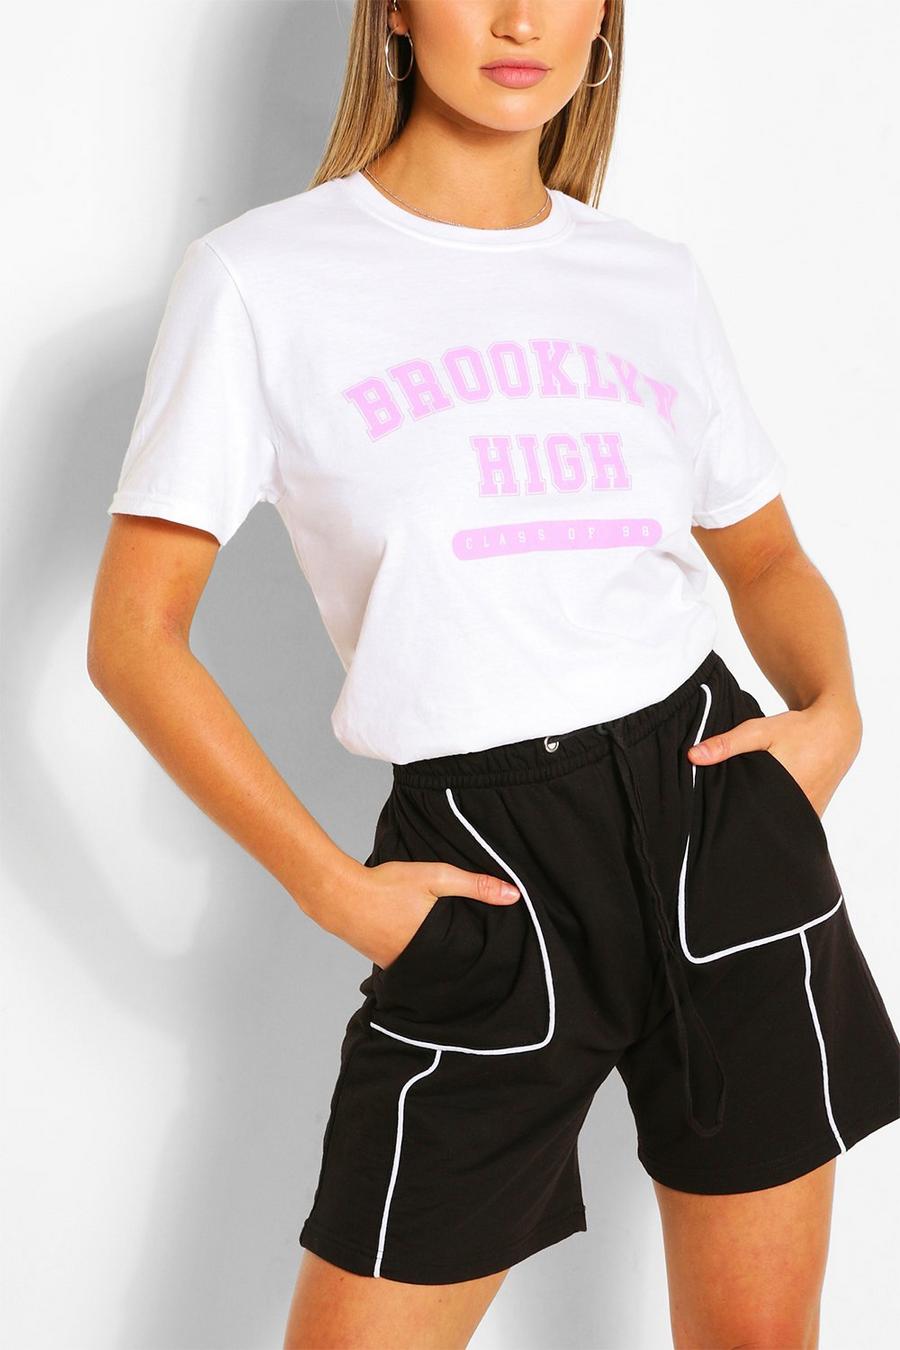 Brooklyn High Collegiate T-Shirt image number 1